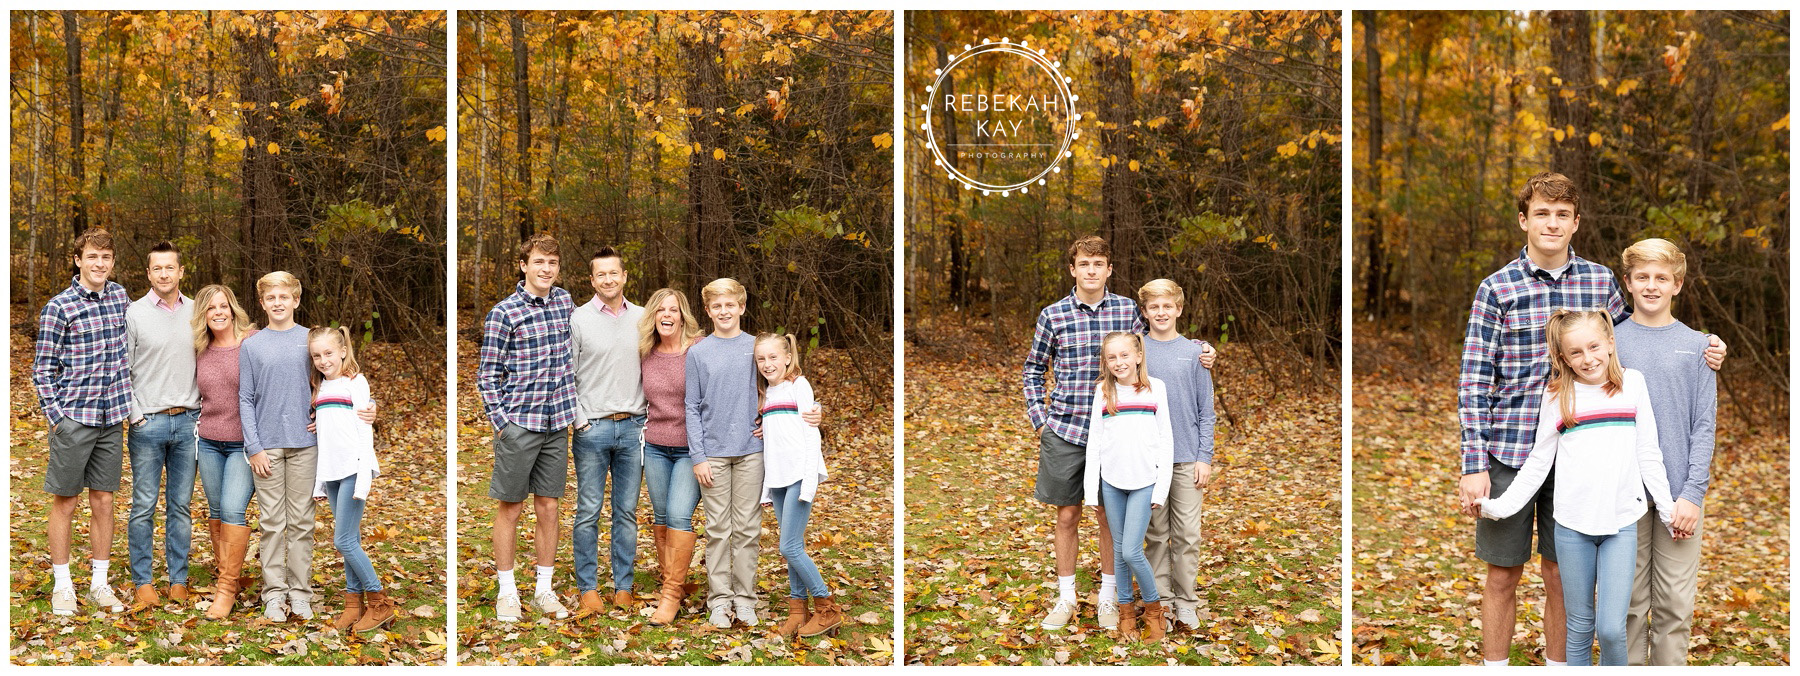 family fall foliage portrait